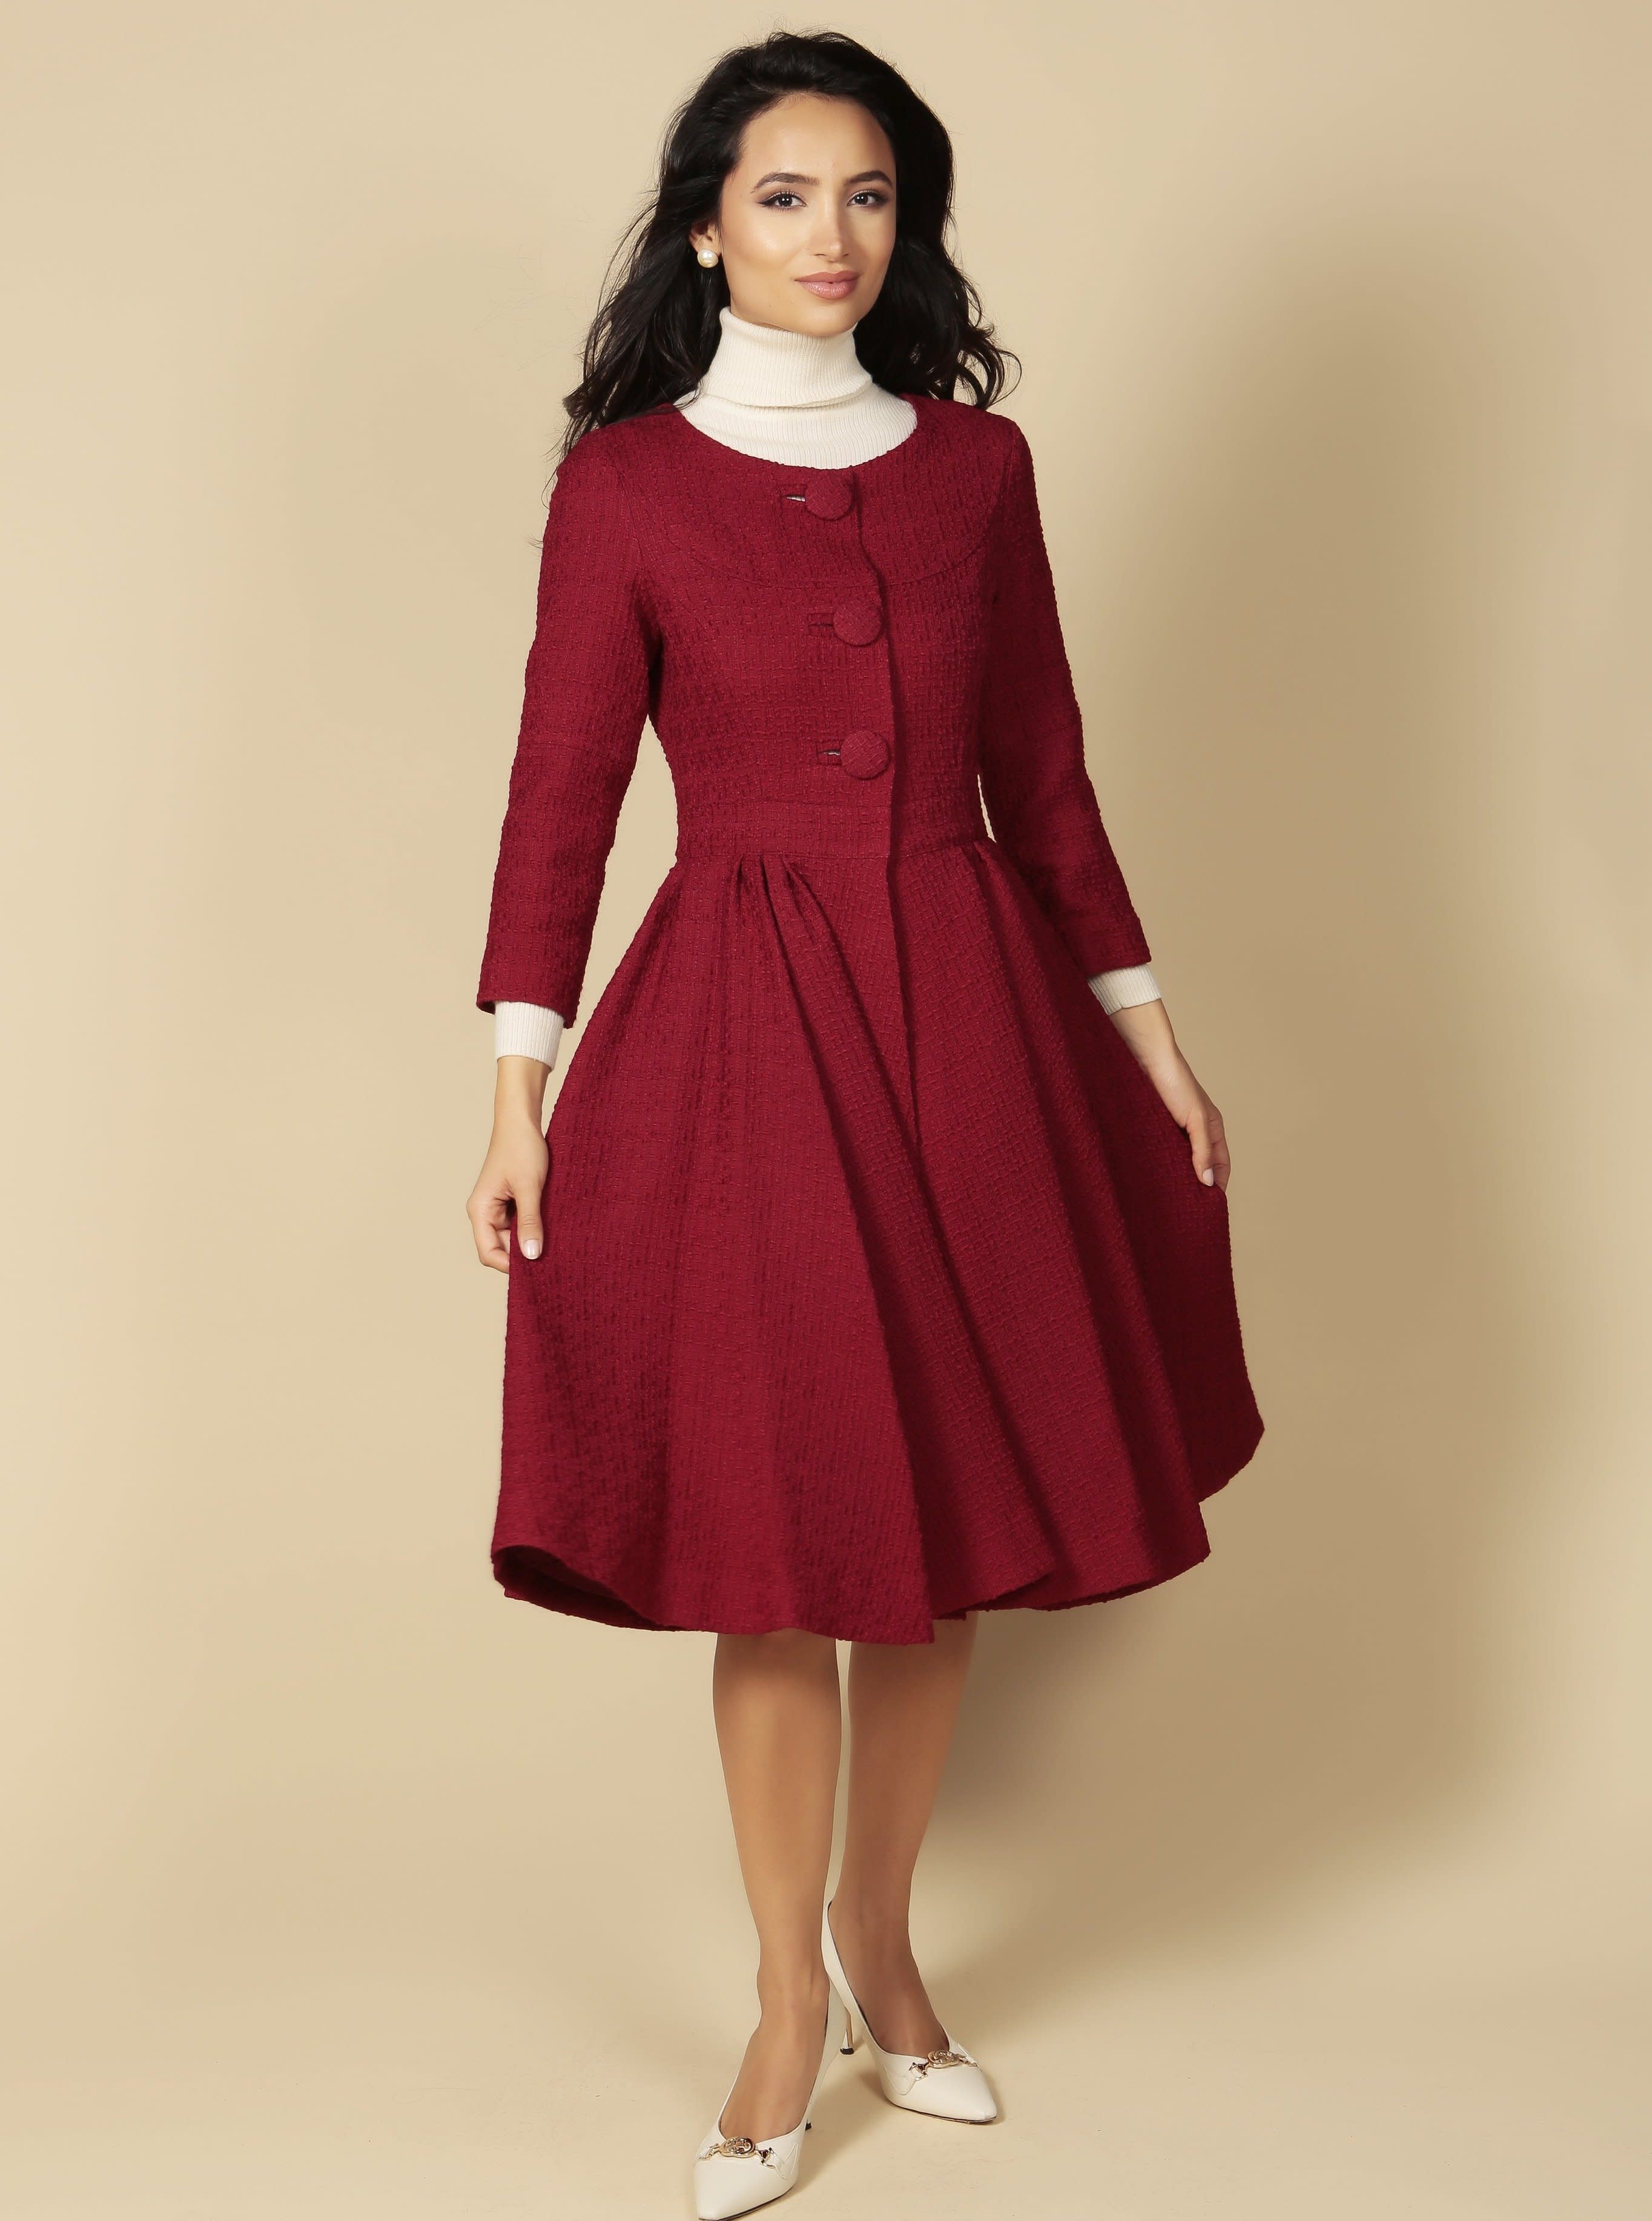 Limited Edition 'My Fair Lady' Italian Wool Swing Dress Coat In Rosso ...